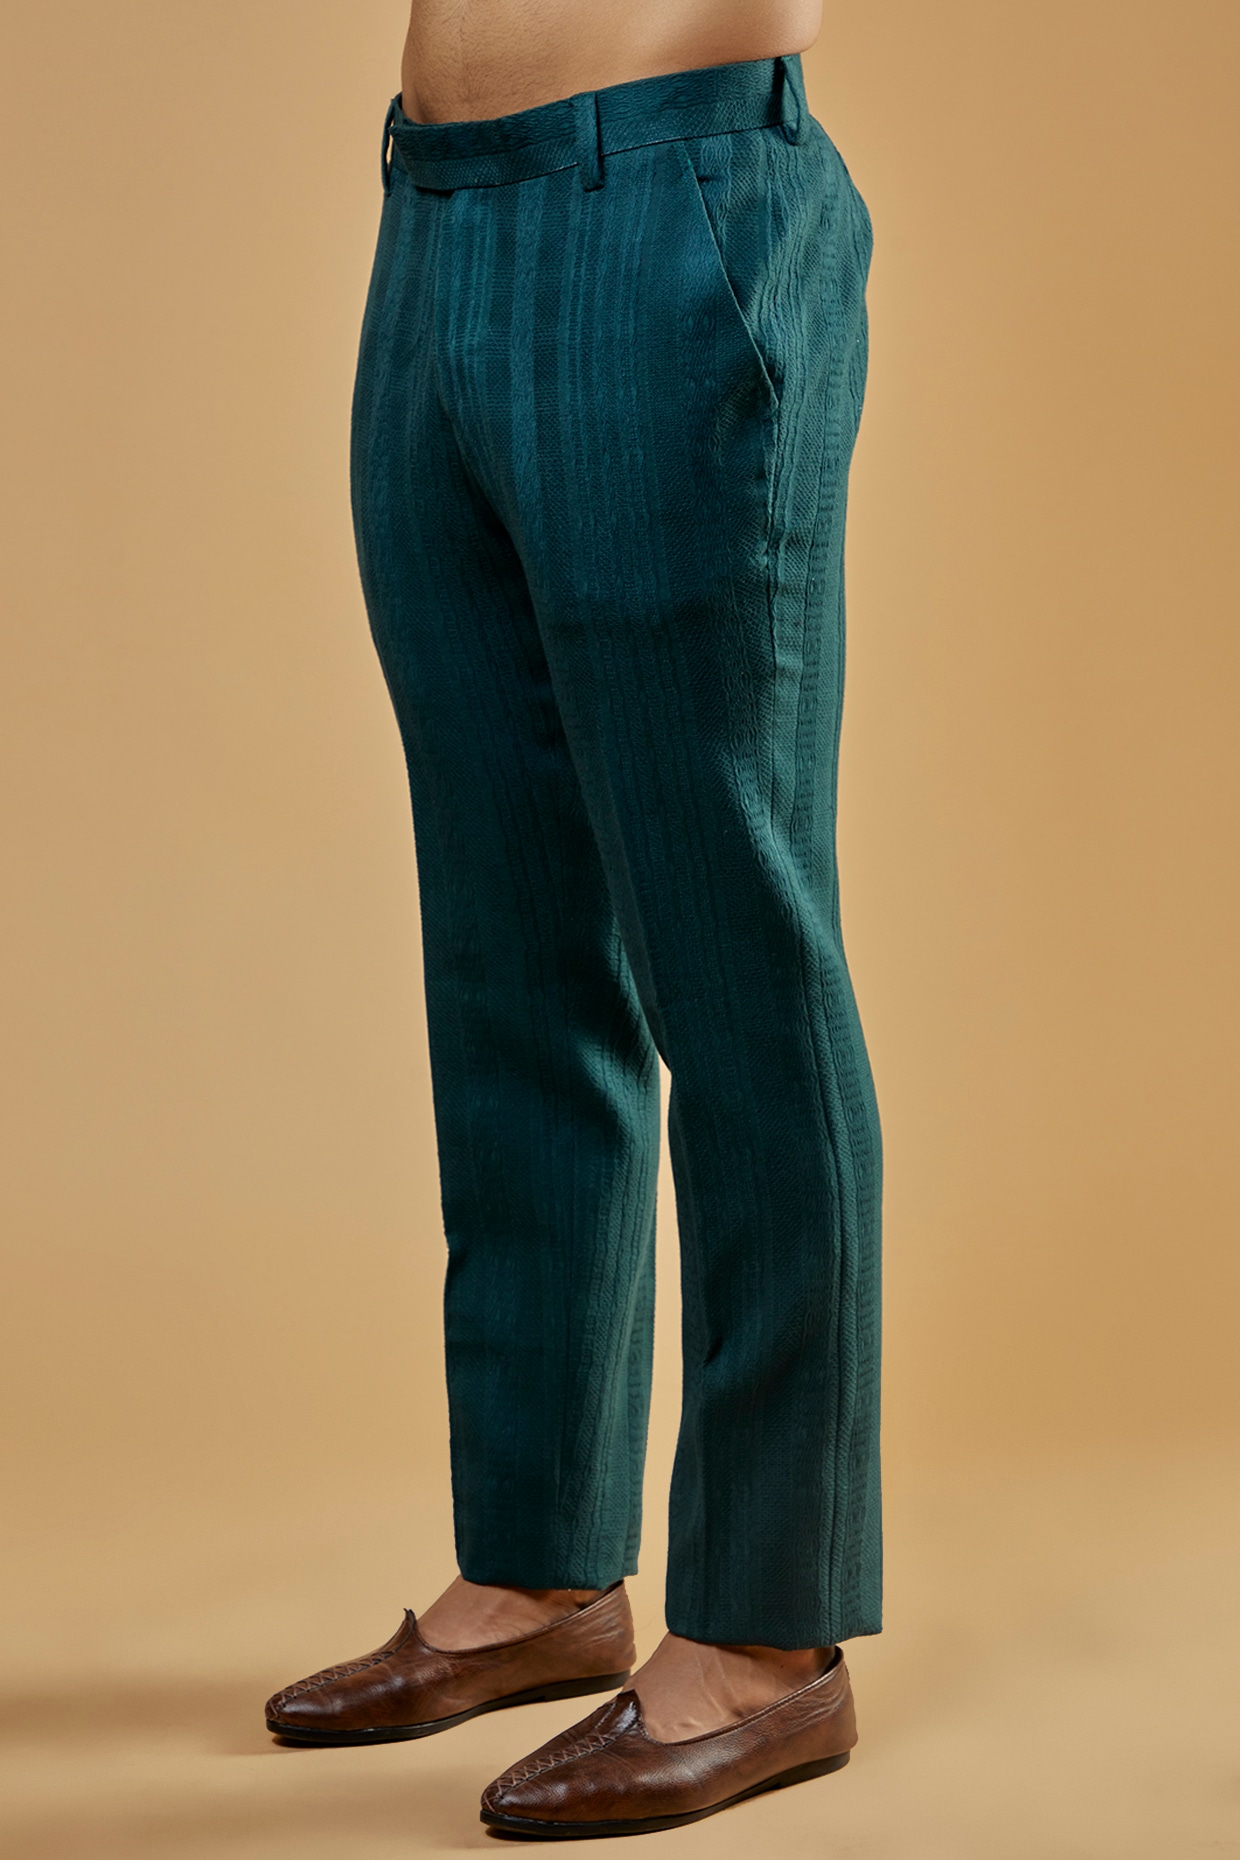 Burberry jacket and wide-leg trousers - スーツ・フォーマル・ドレス